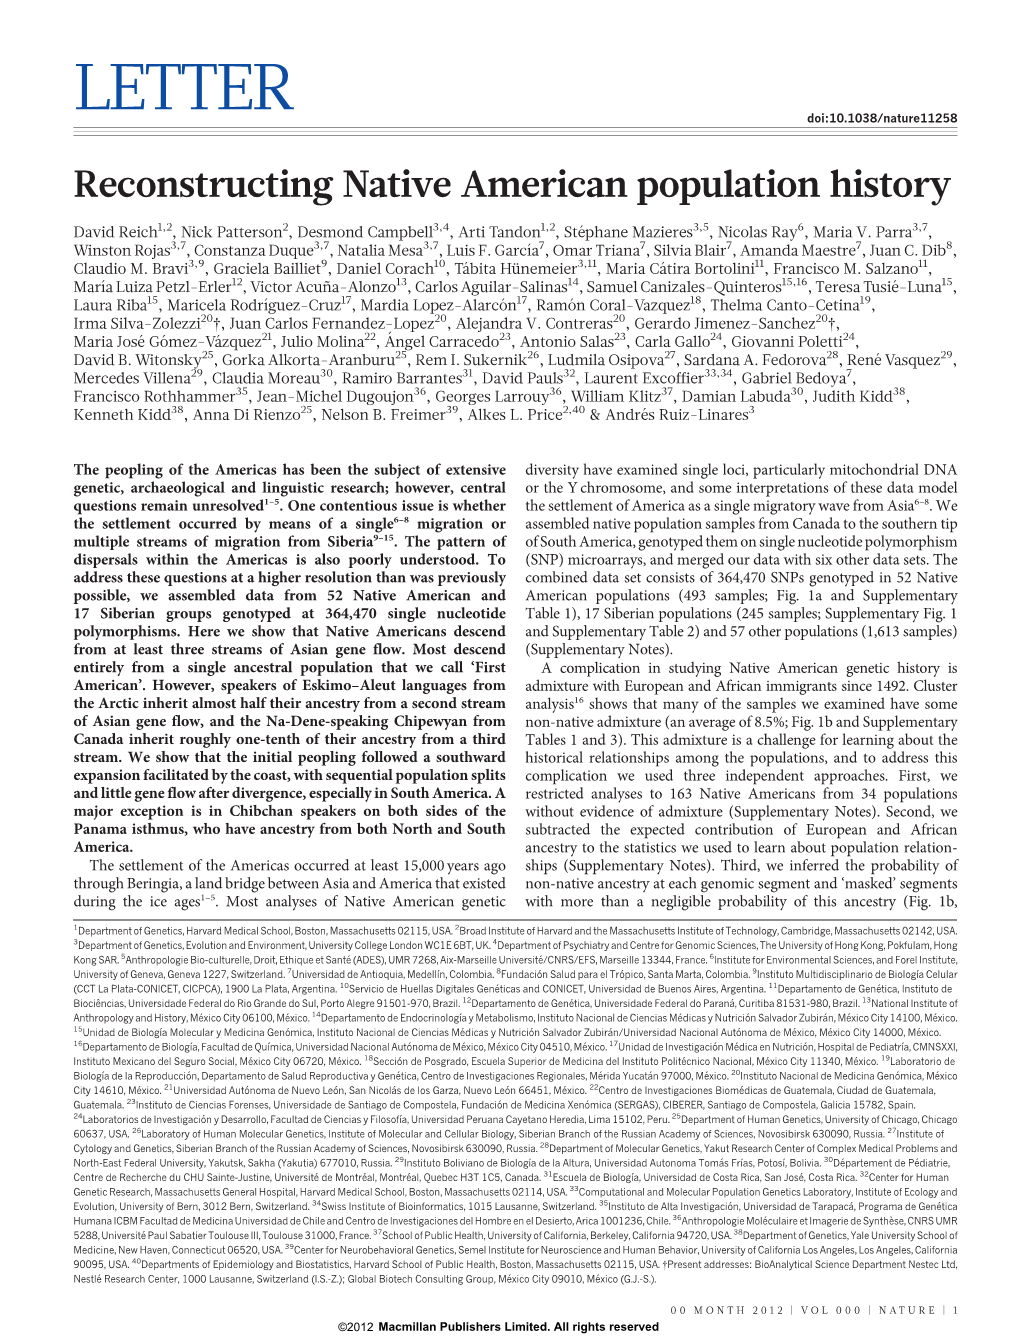 Reconstructing Native American Population History